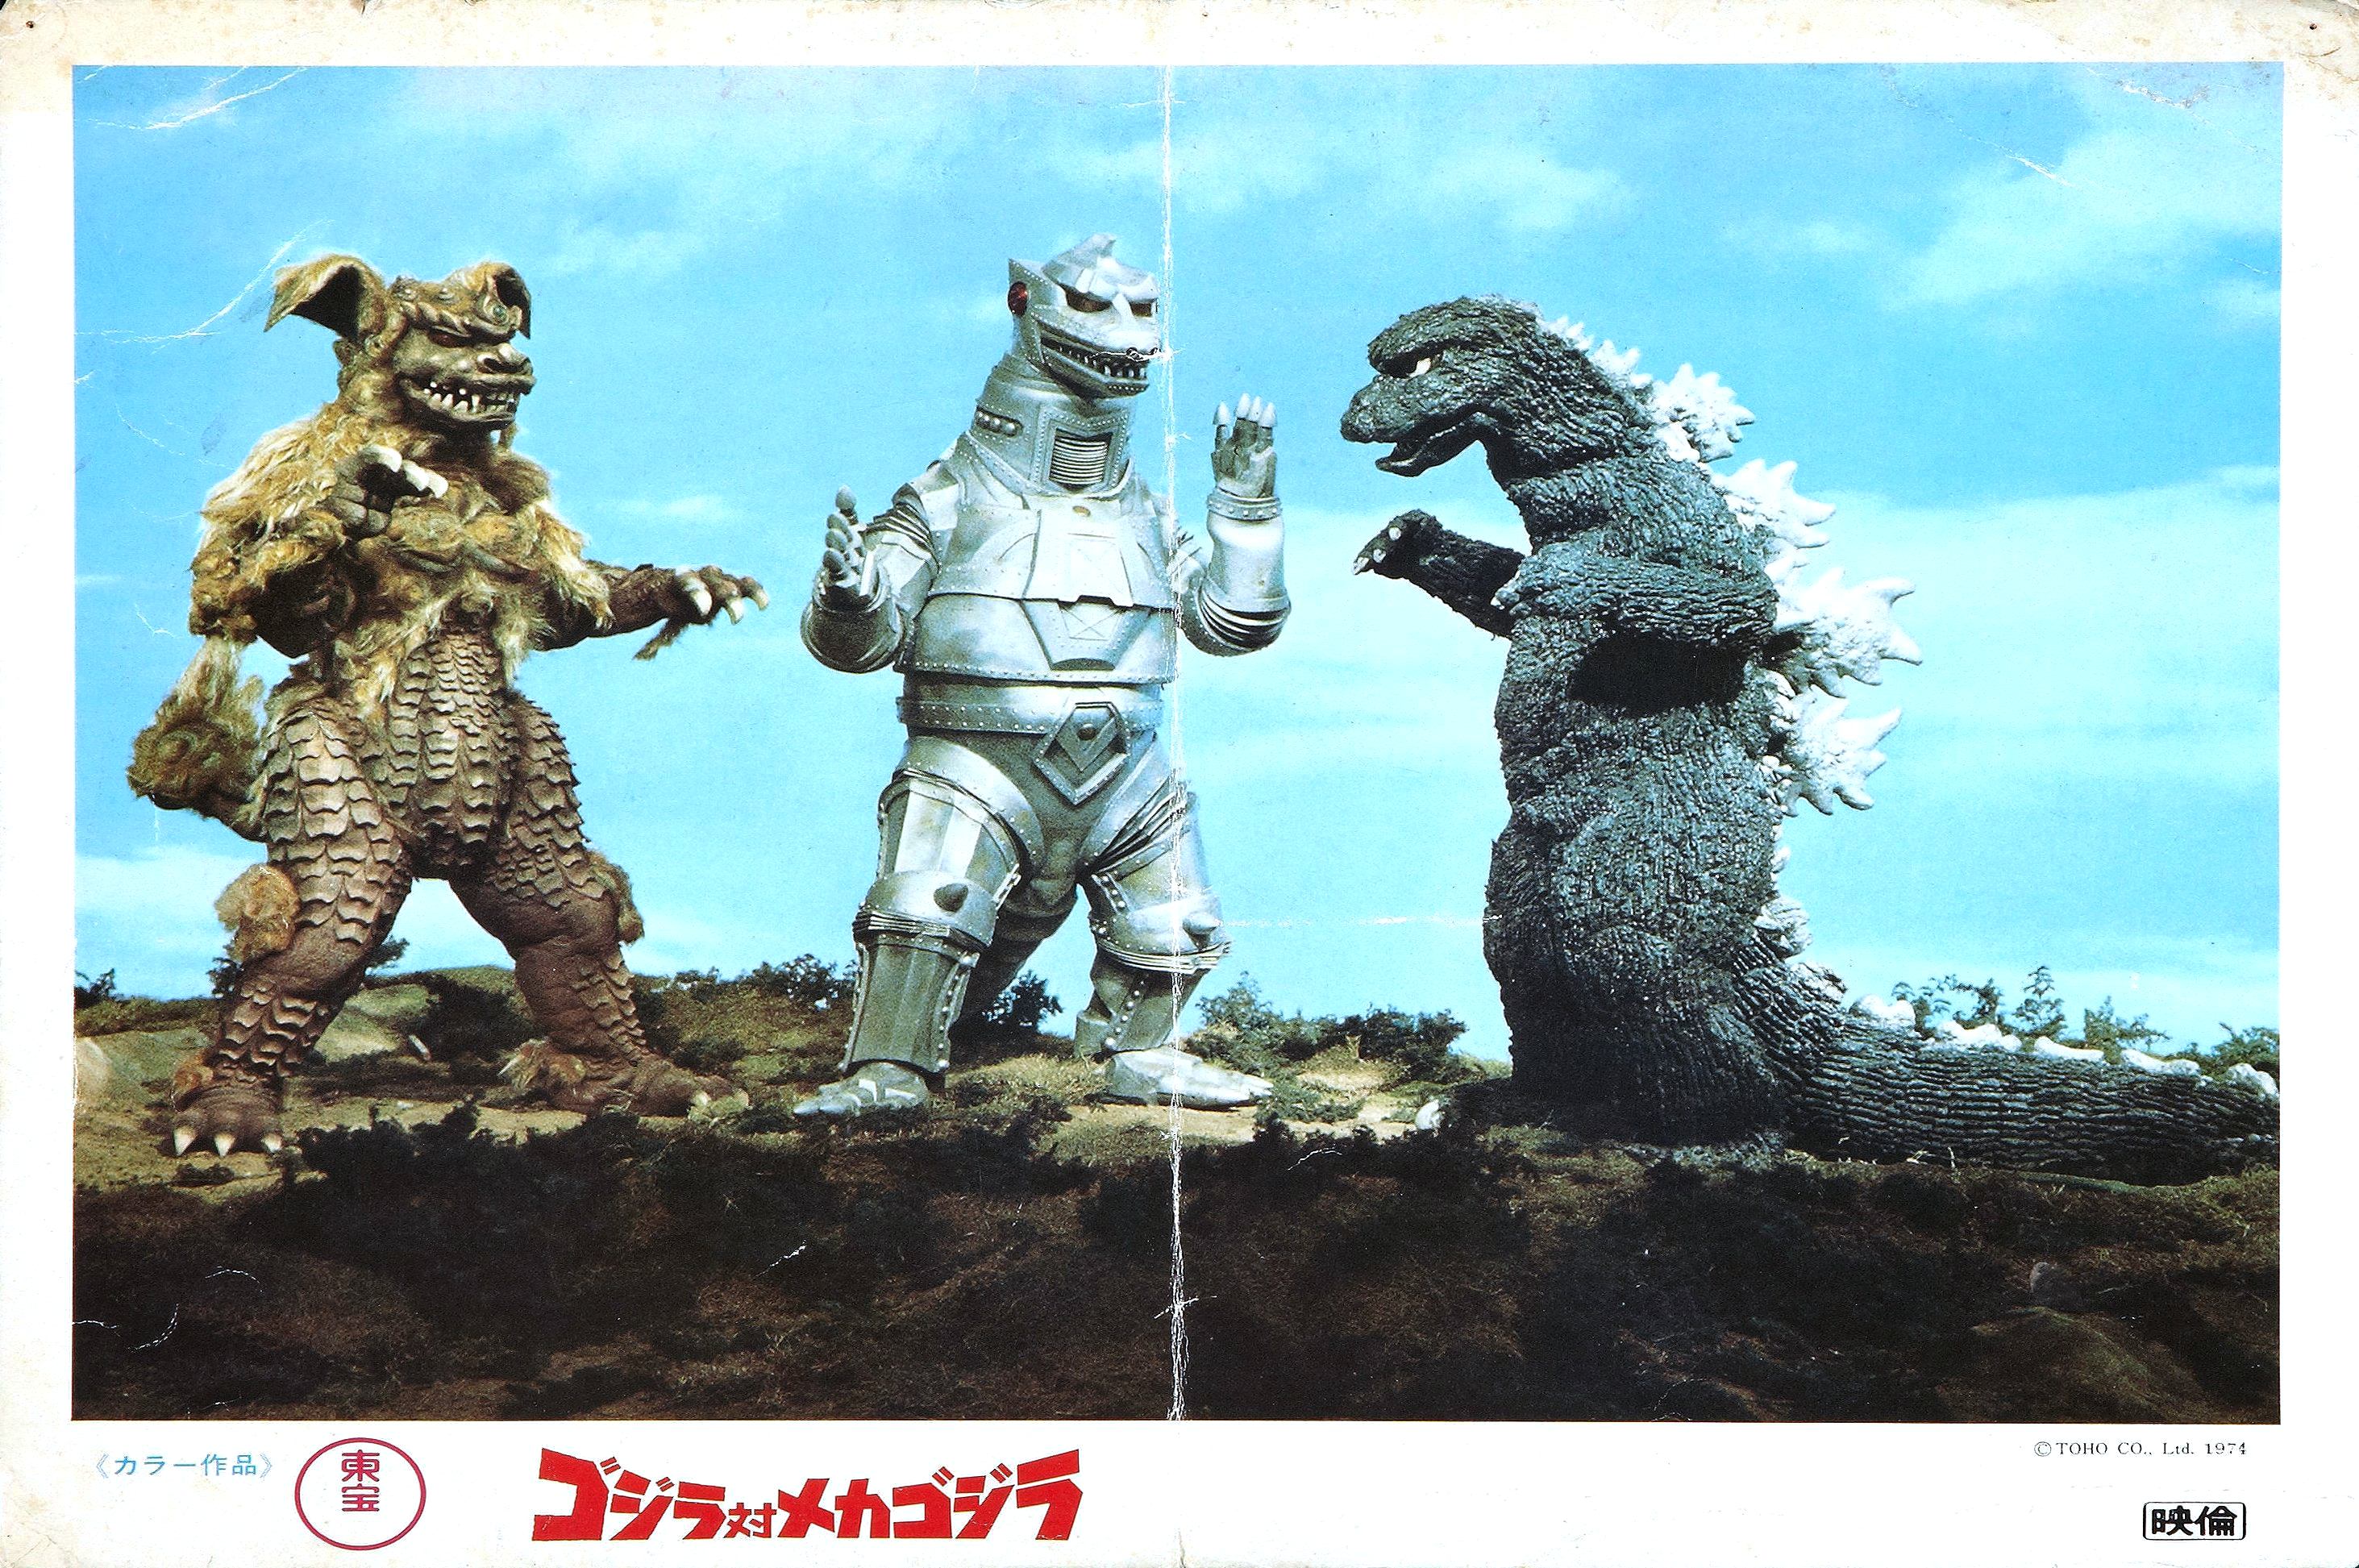 Poster for Godzilla vs. Mechagodzilla.